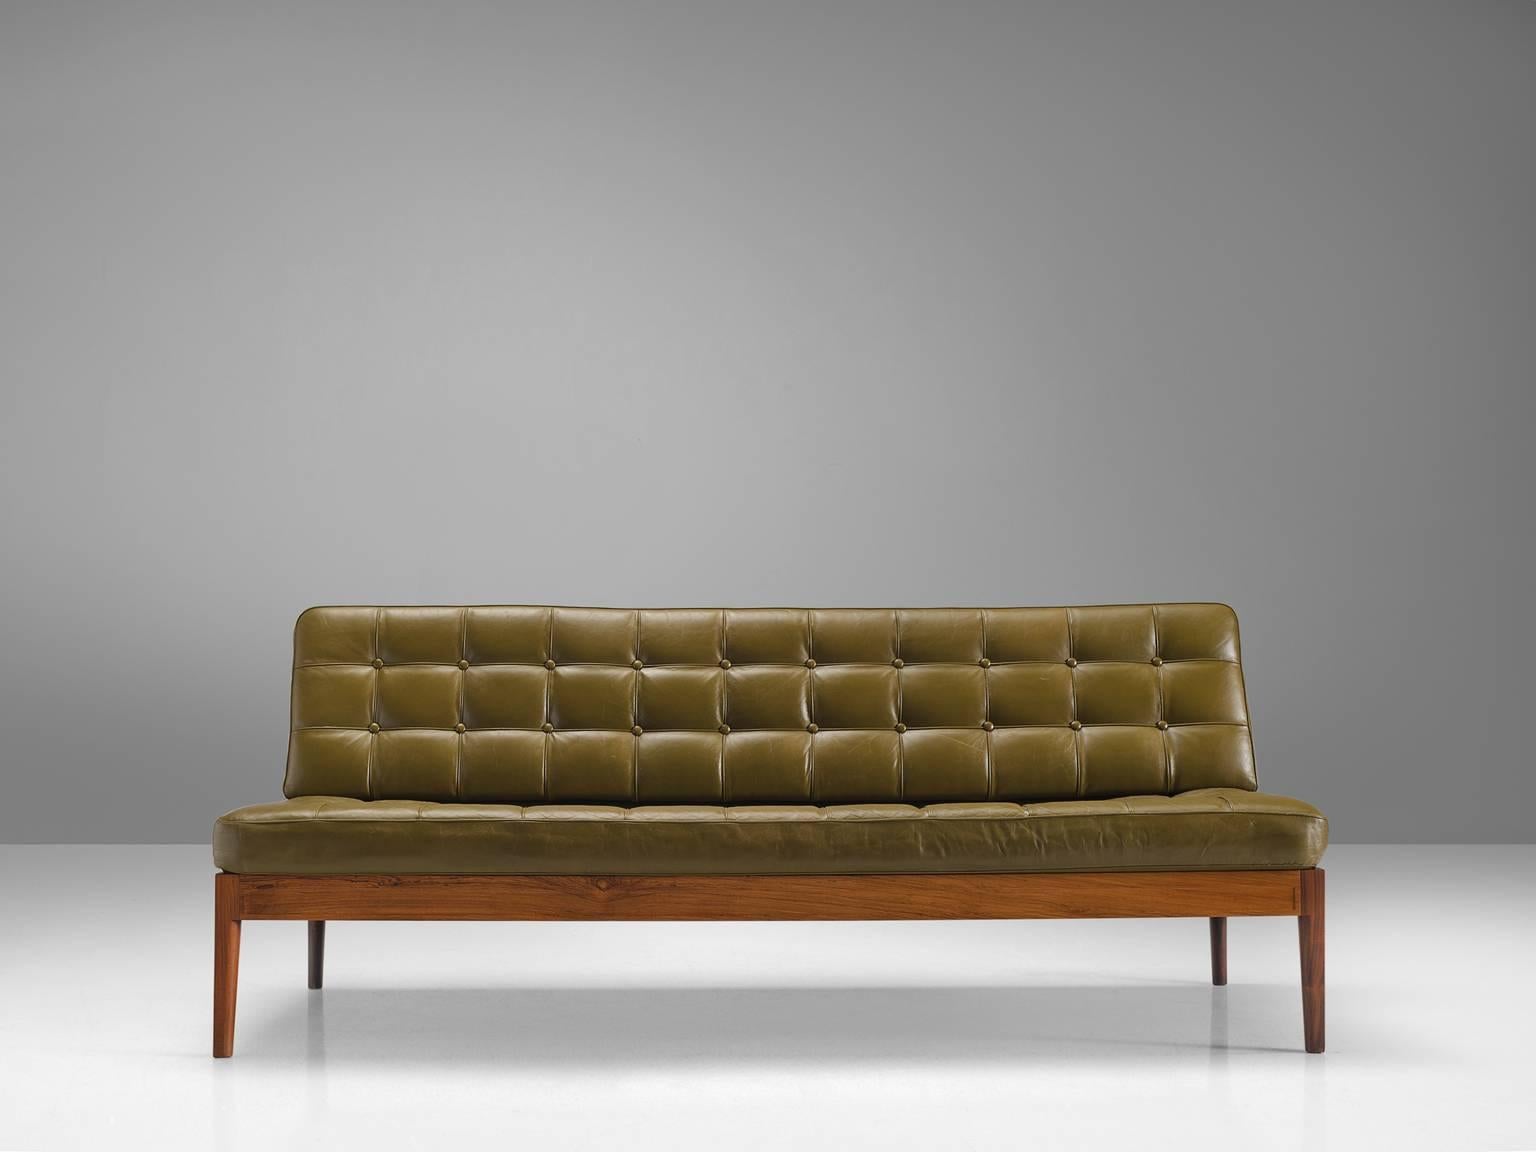 Danish Finn Juhl 'Diplomat' Sofa in Olive Green Leather and Rosewood